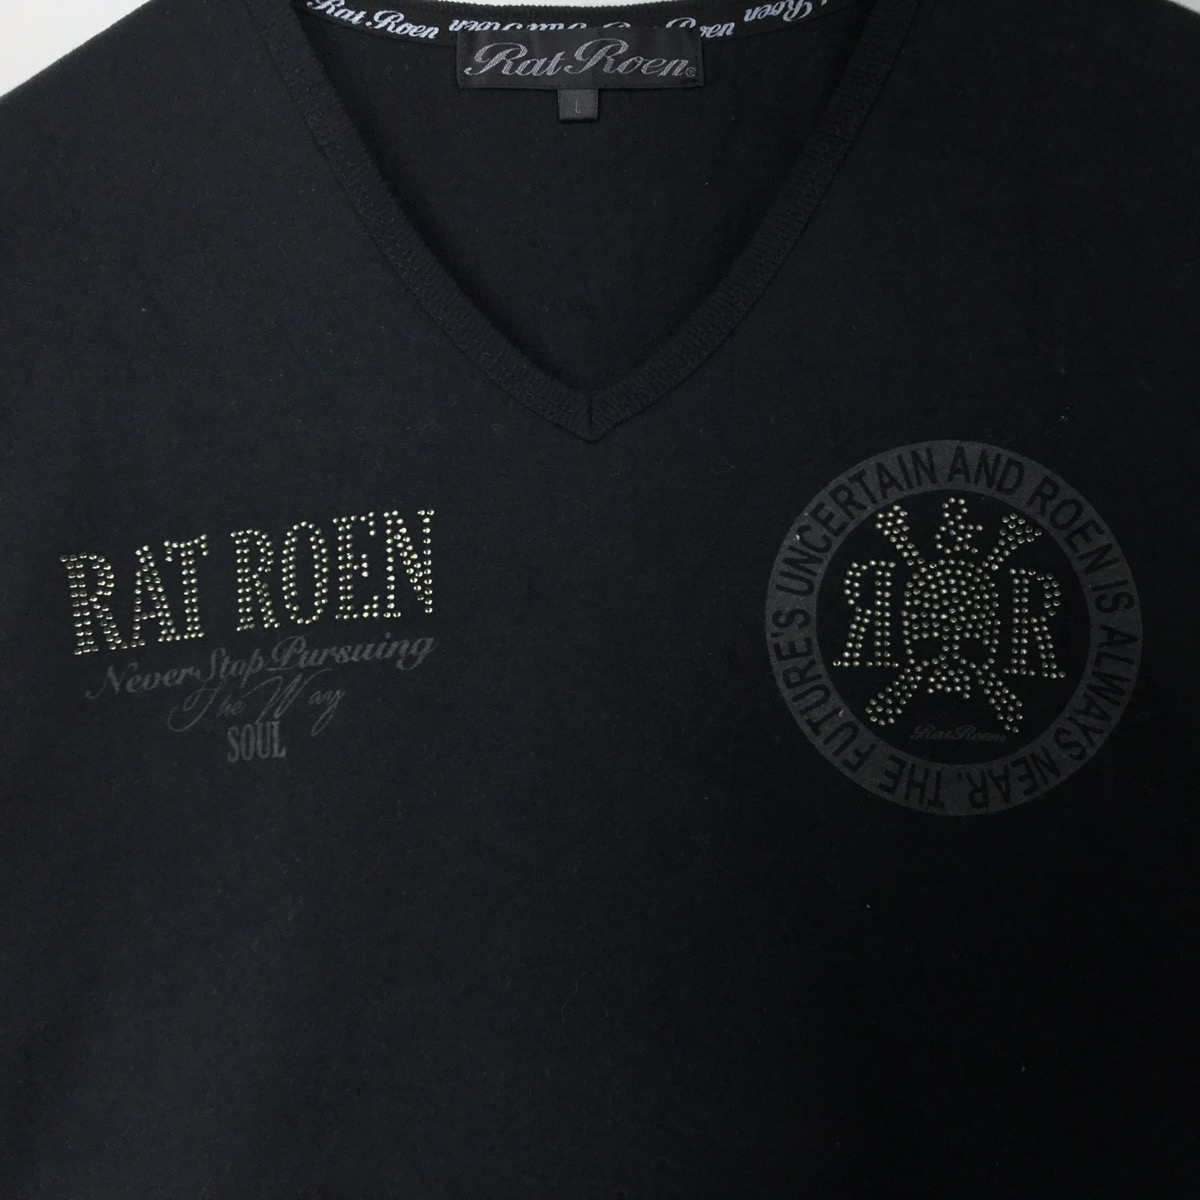 Vintage Rat Roen Tshirt Punk Shirt Japanese Brand - 4